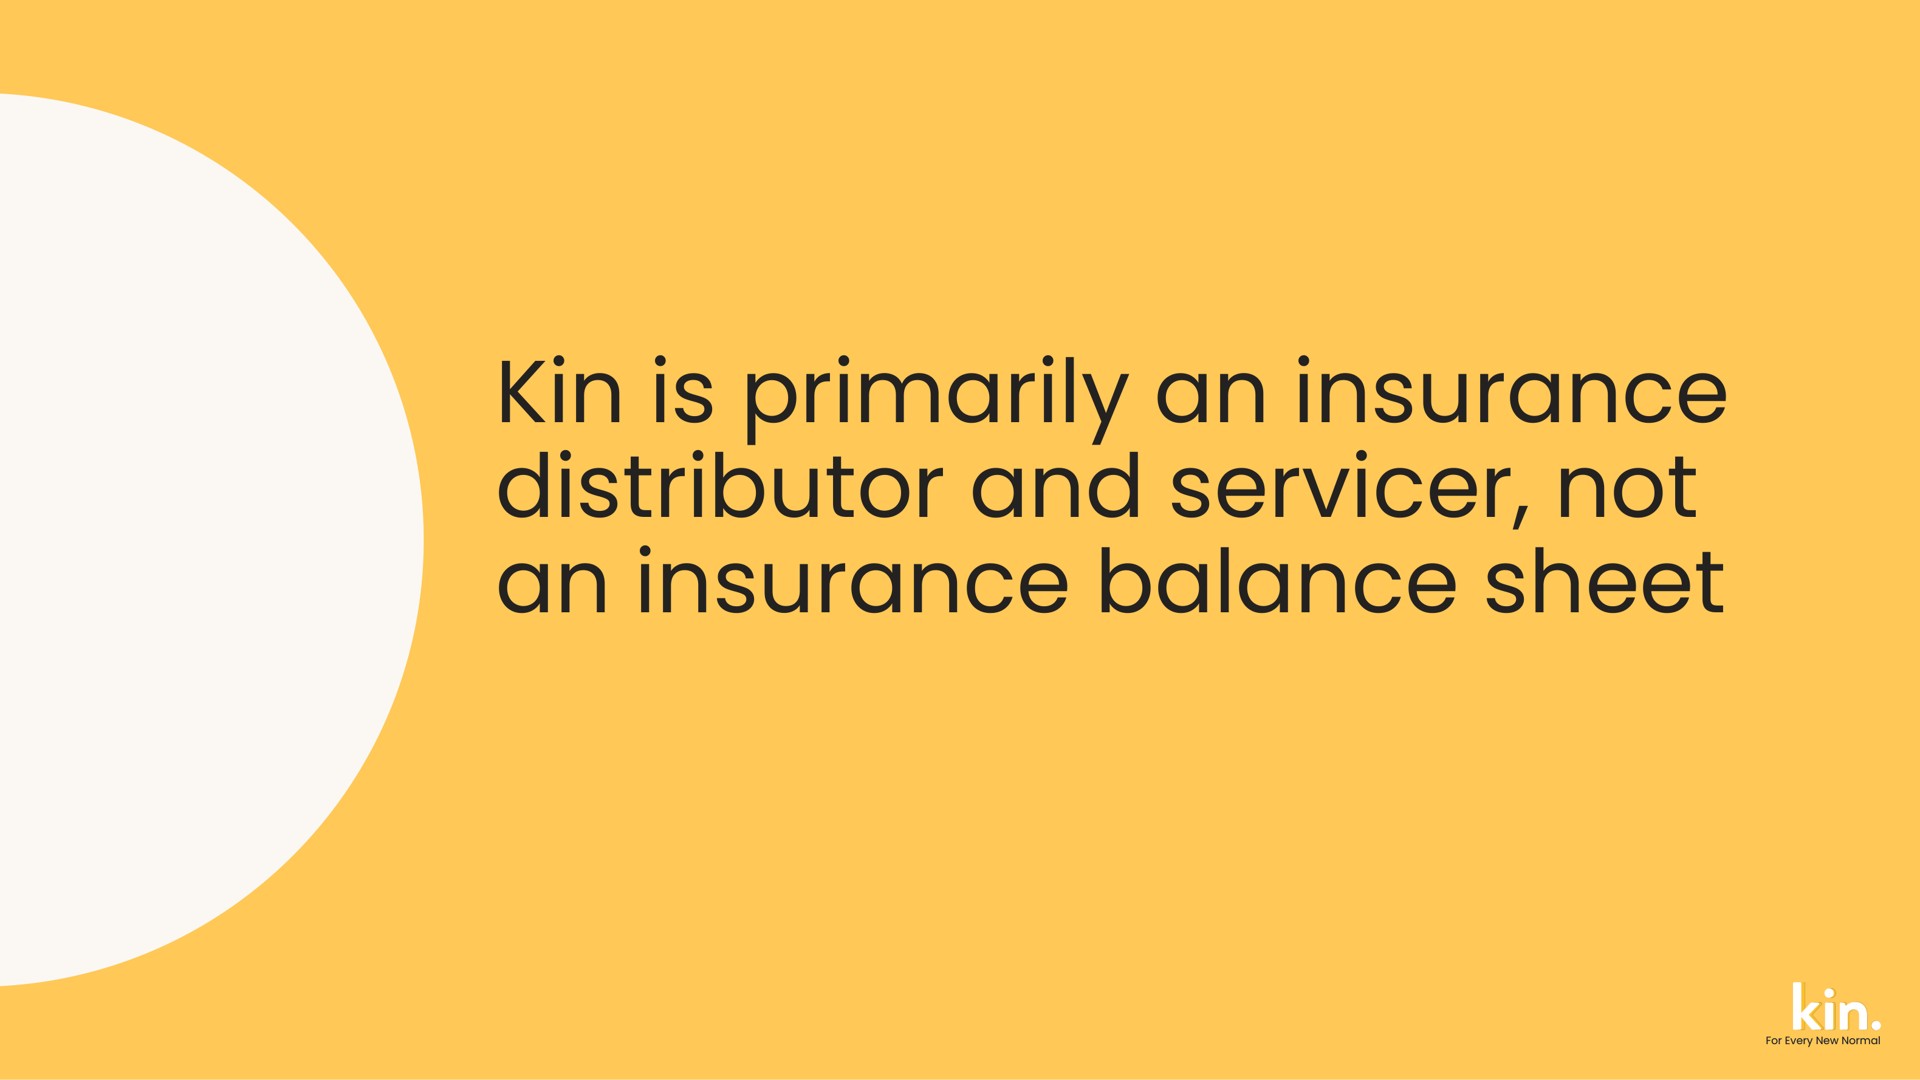 kin is primarily an insurance distributor and not an insurance balance sheet | Kin